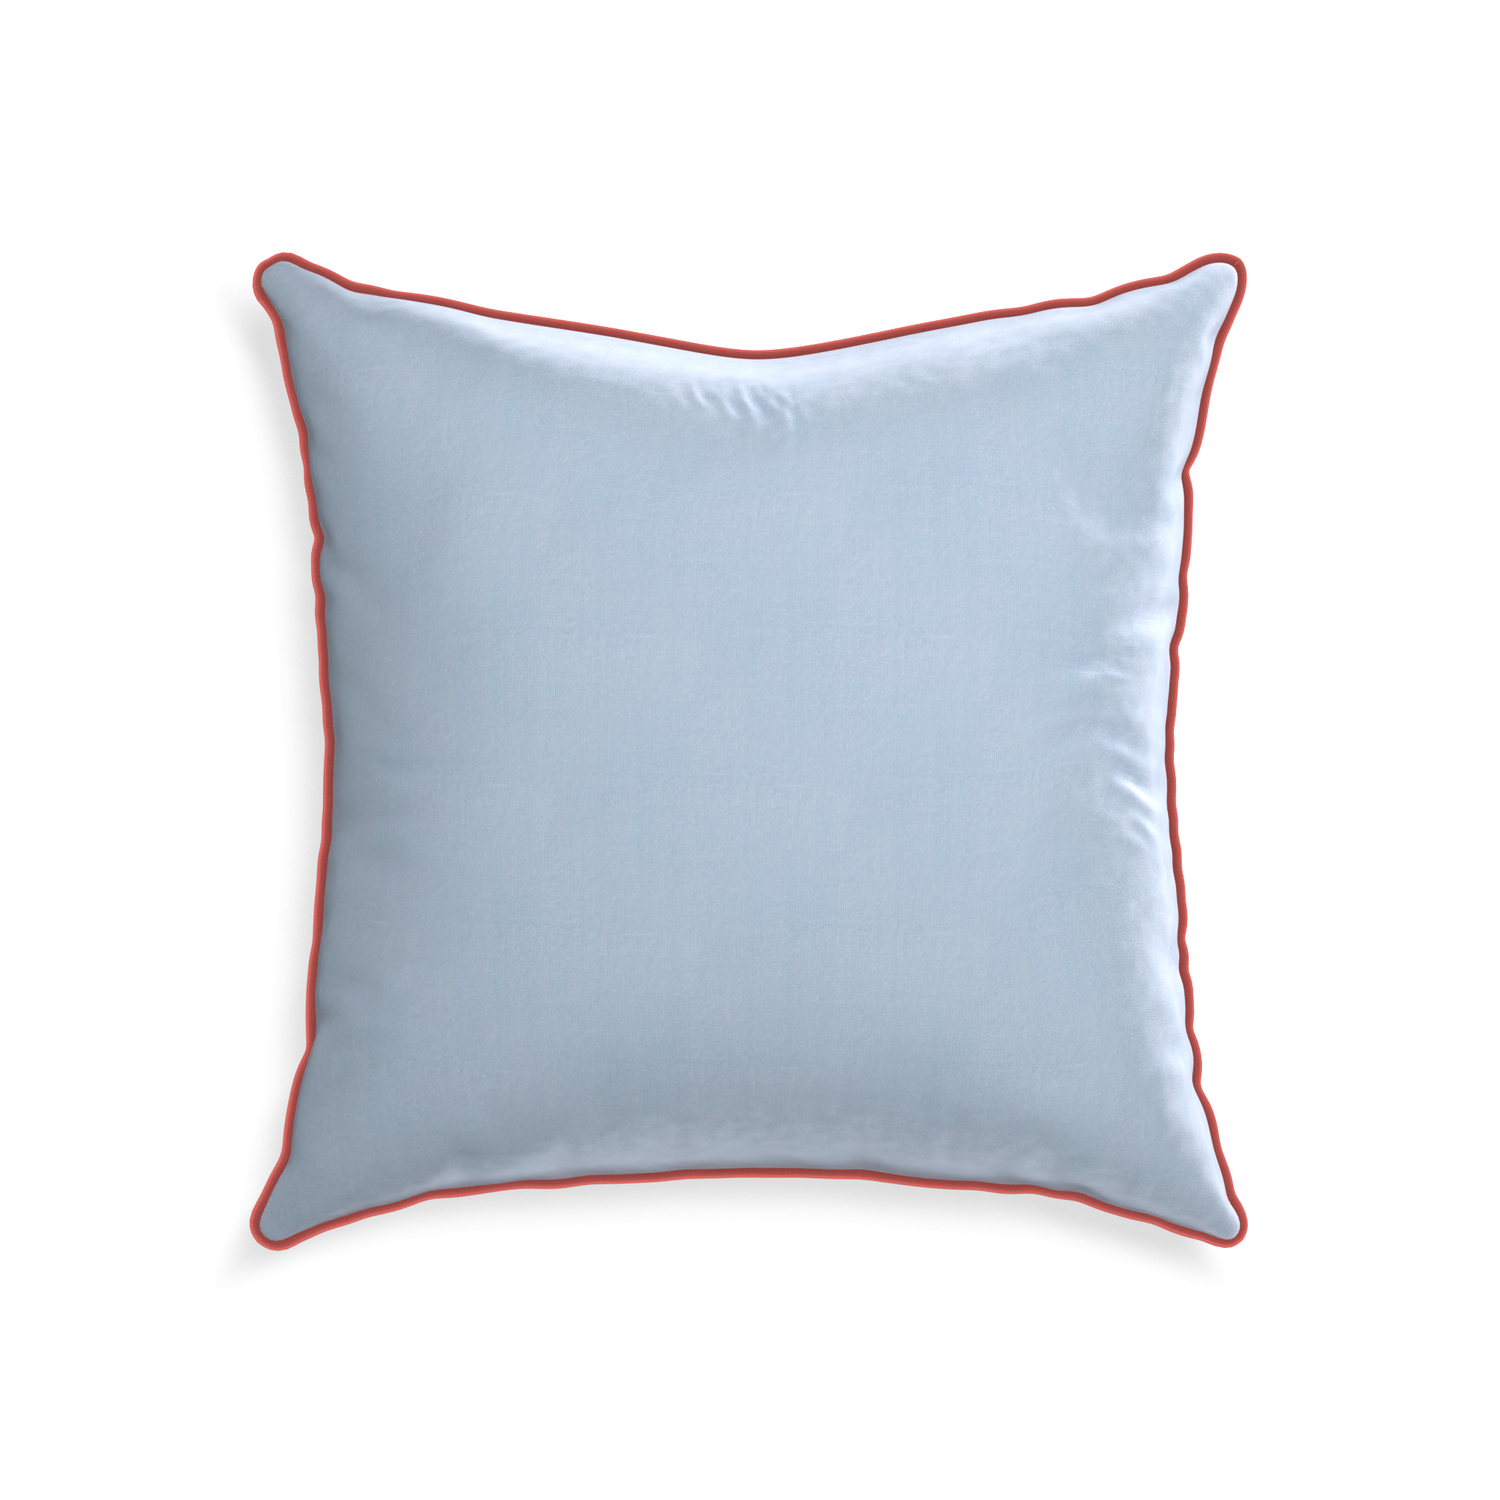 22-square sky velvet custom pillow with c piping on white background